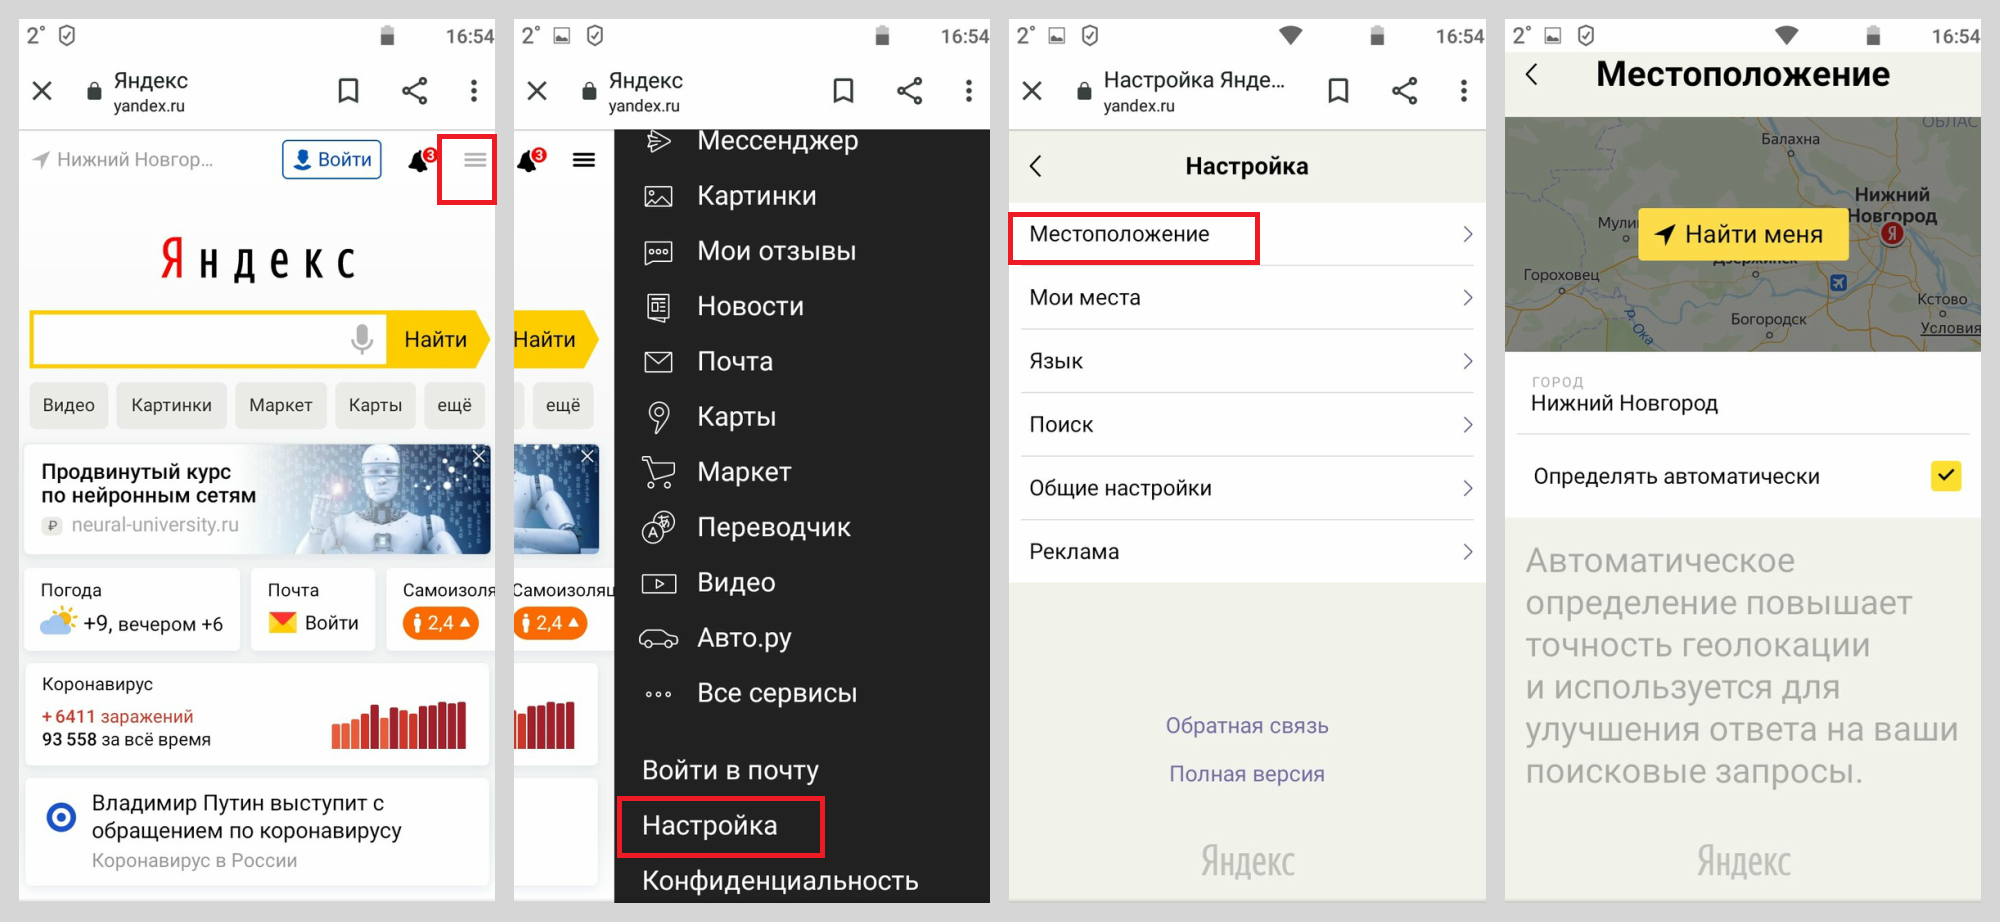 Как на яндексе настроить новости в телефоне. Изменить город в Яндексе на телефоне. Изменить местоположение в Яндексе на телефоне. Как поменять город в Яндексе.